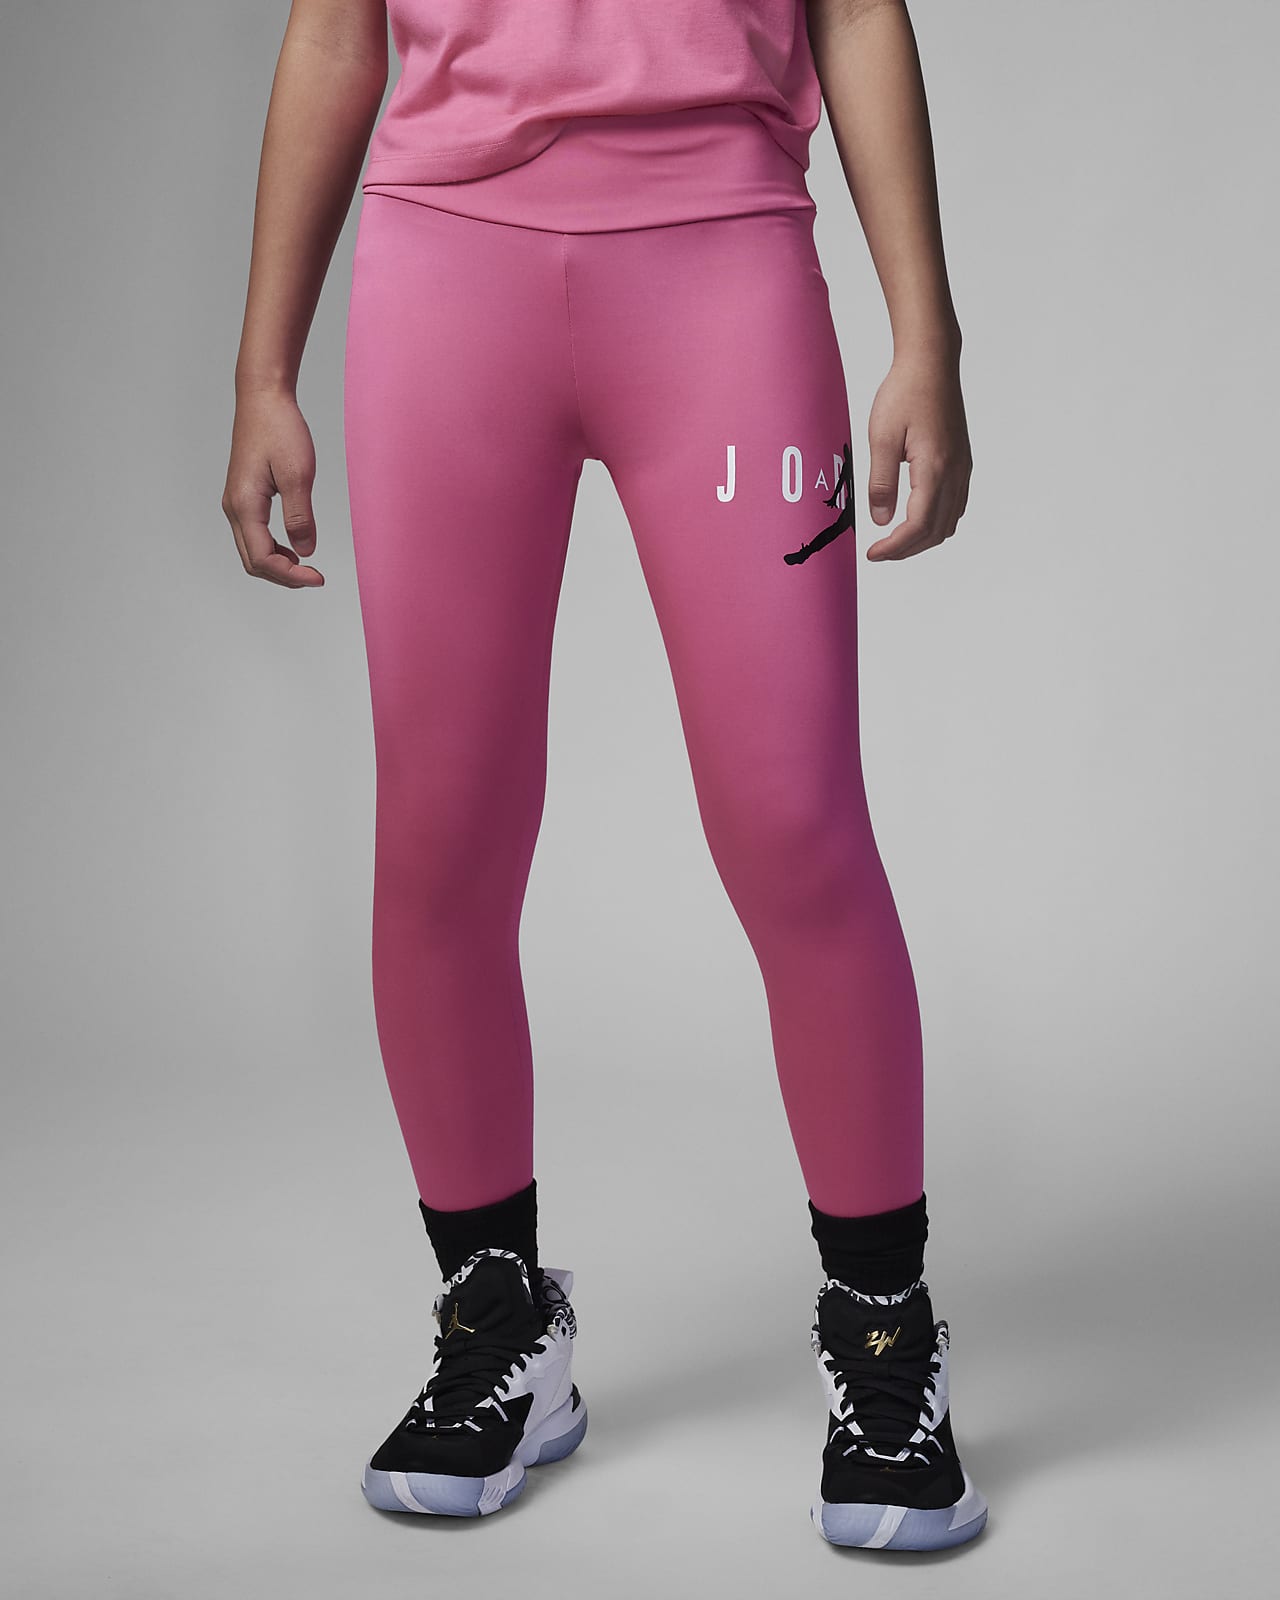 Nike Kids Leggings 'Pink Foam' 36C723 A9Y - Sam Tabak